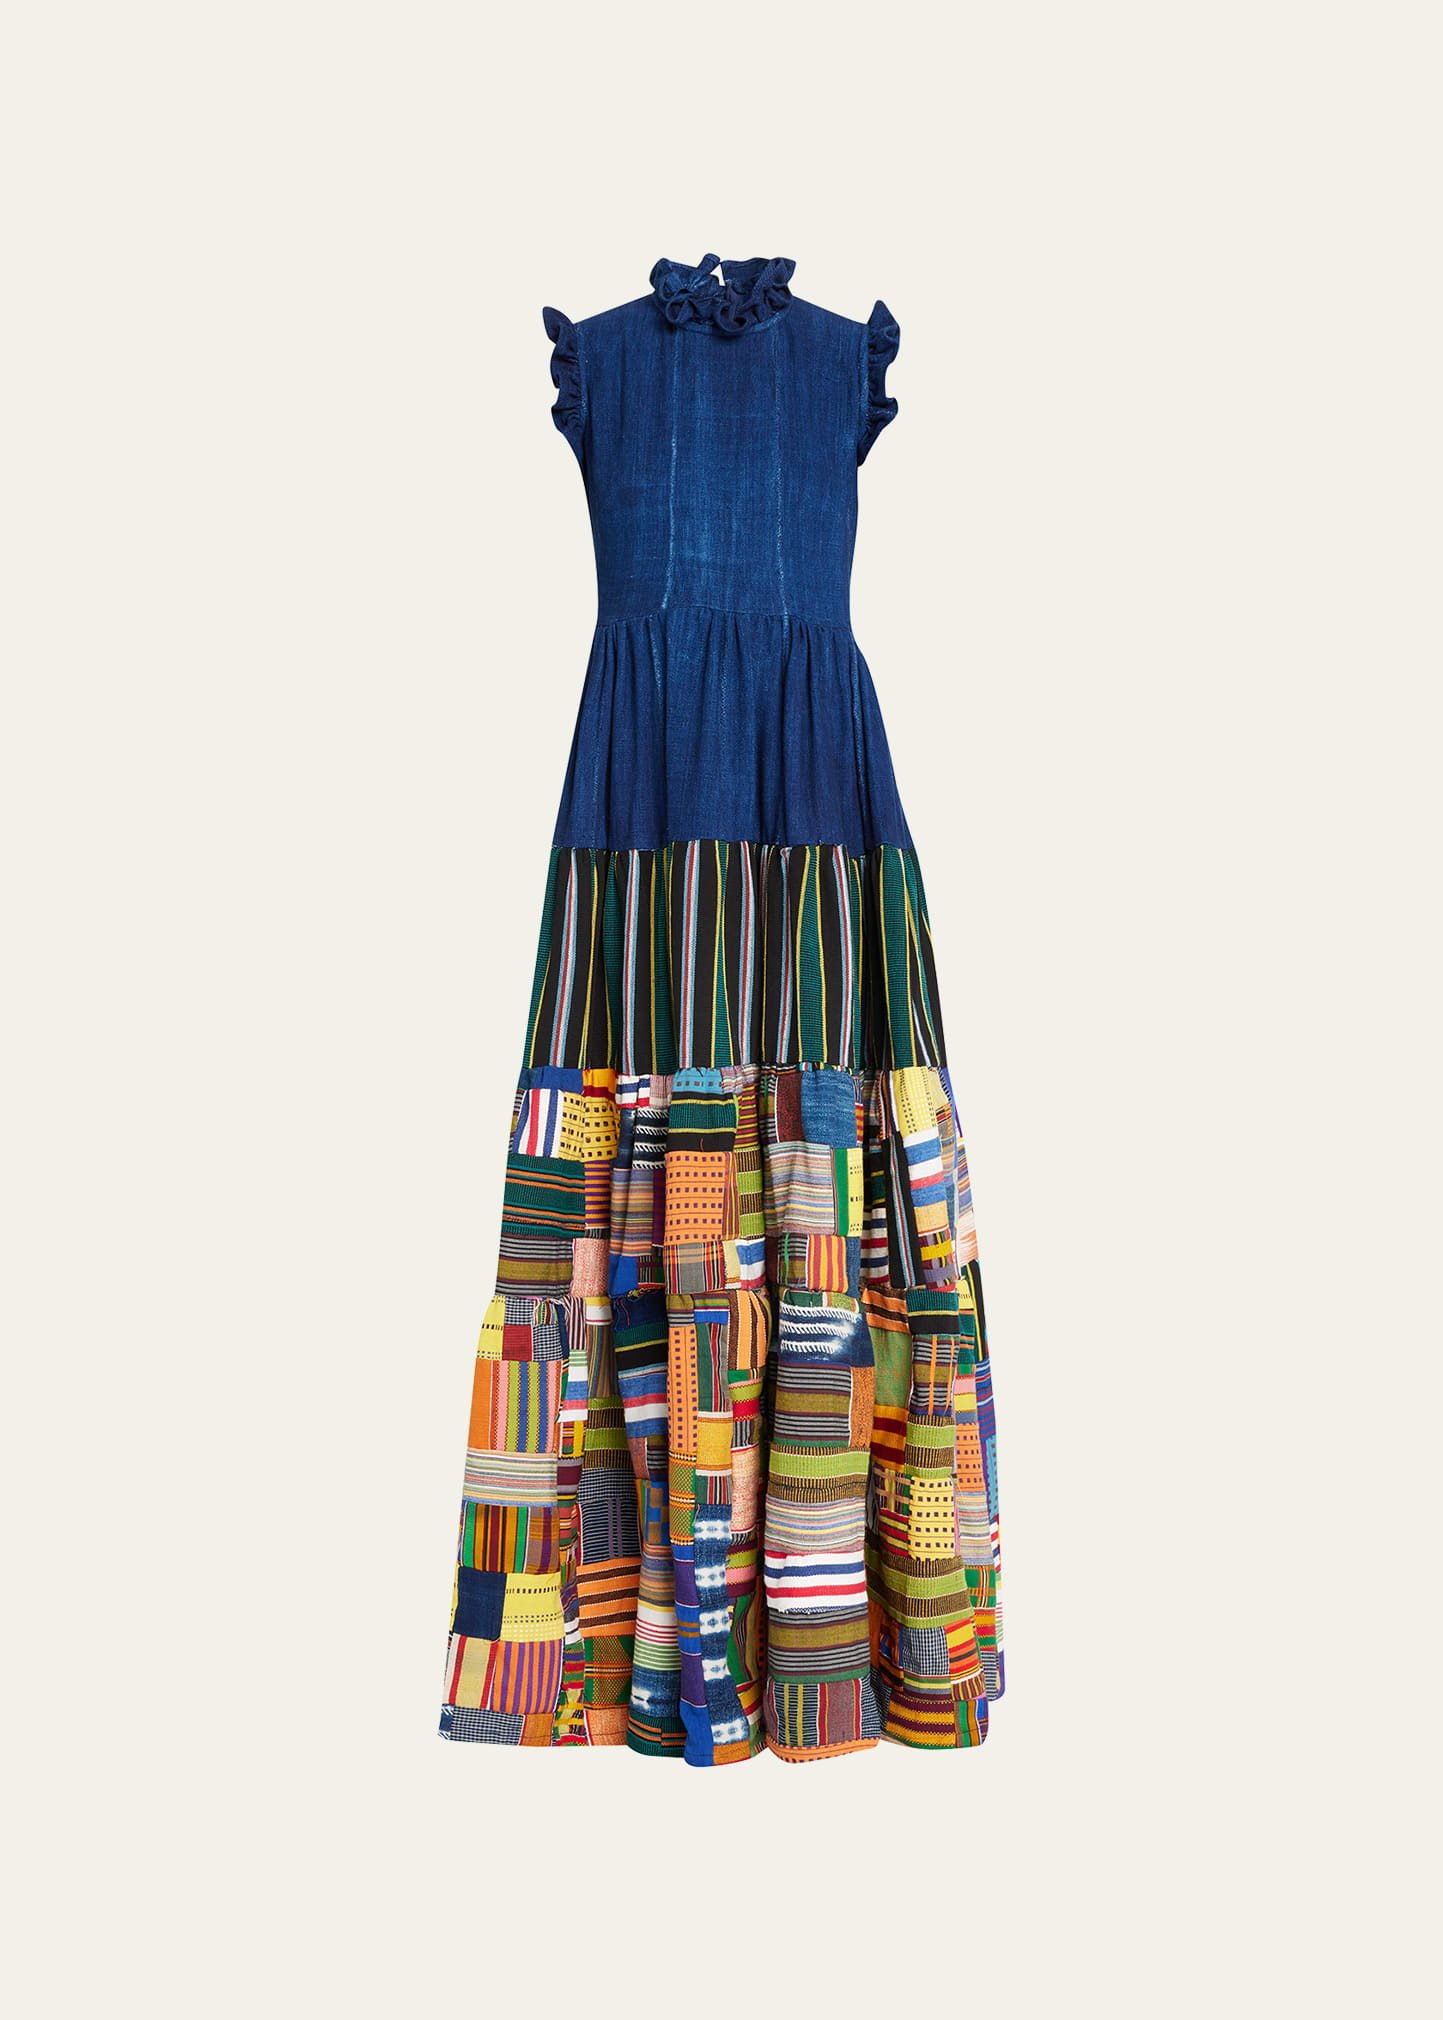 189 Patchwork - Studio Bergdorf Goodman Dress Kente Sleeveless Cotton & Maxi